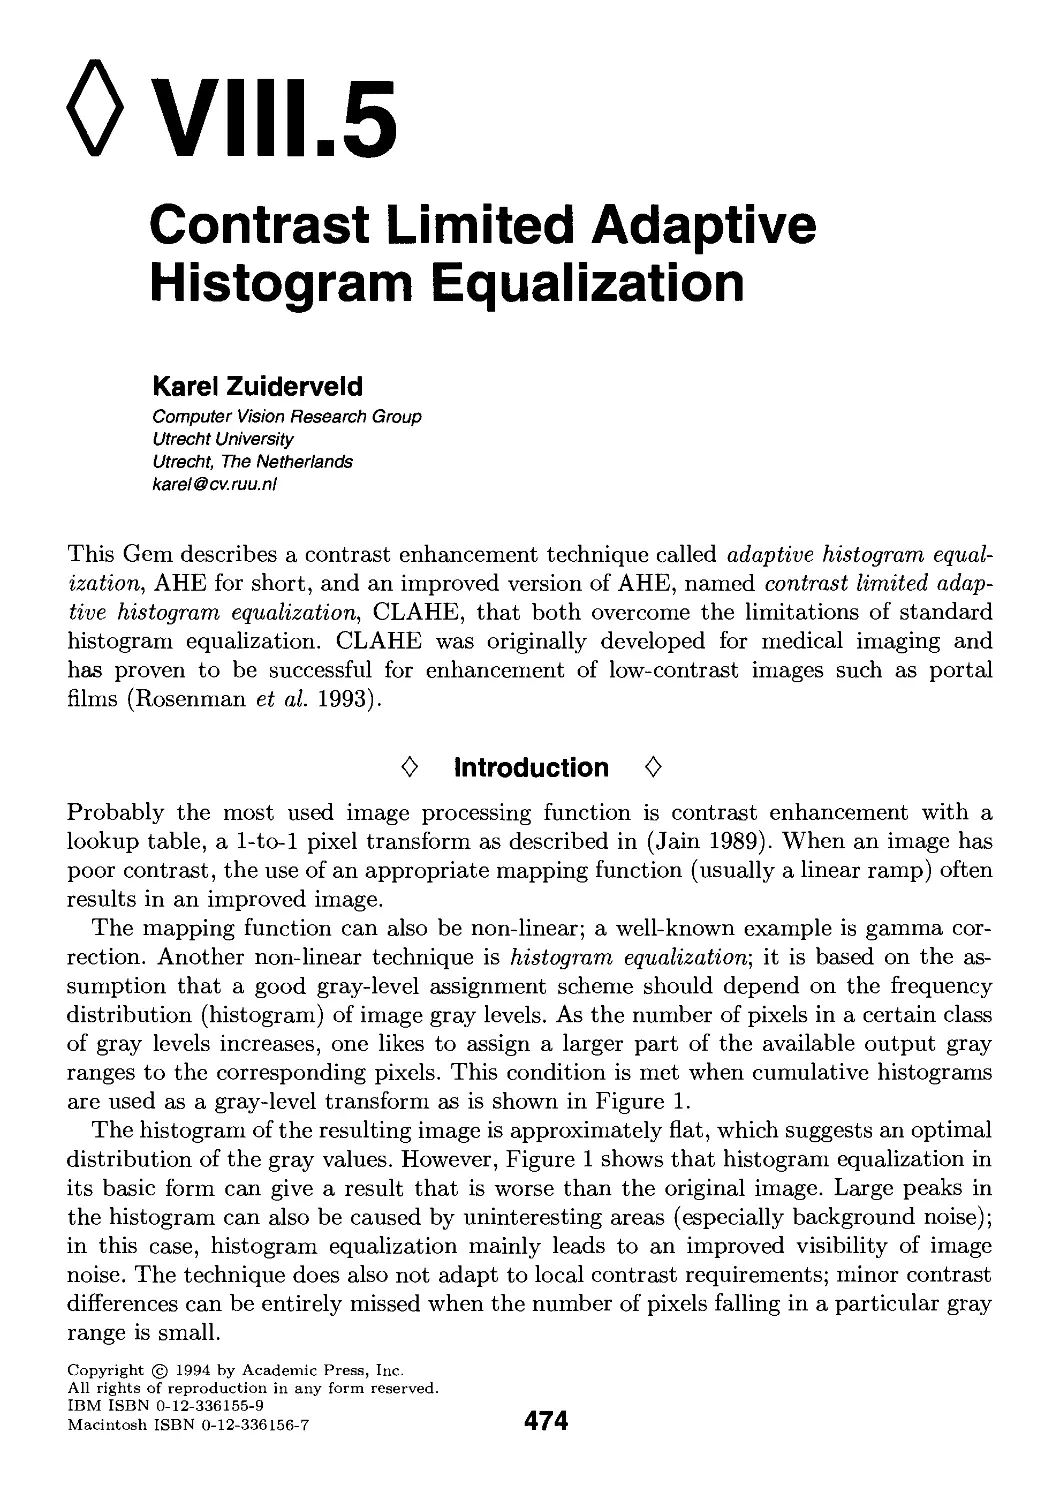 VIII.5. Contrast Limited Adaptive Histogram Equalization by Karel Zuiderveld